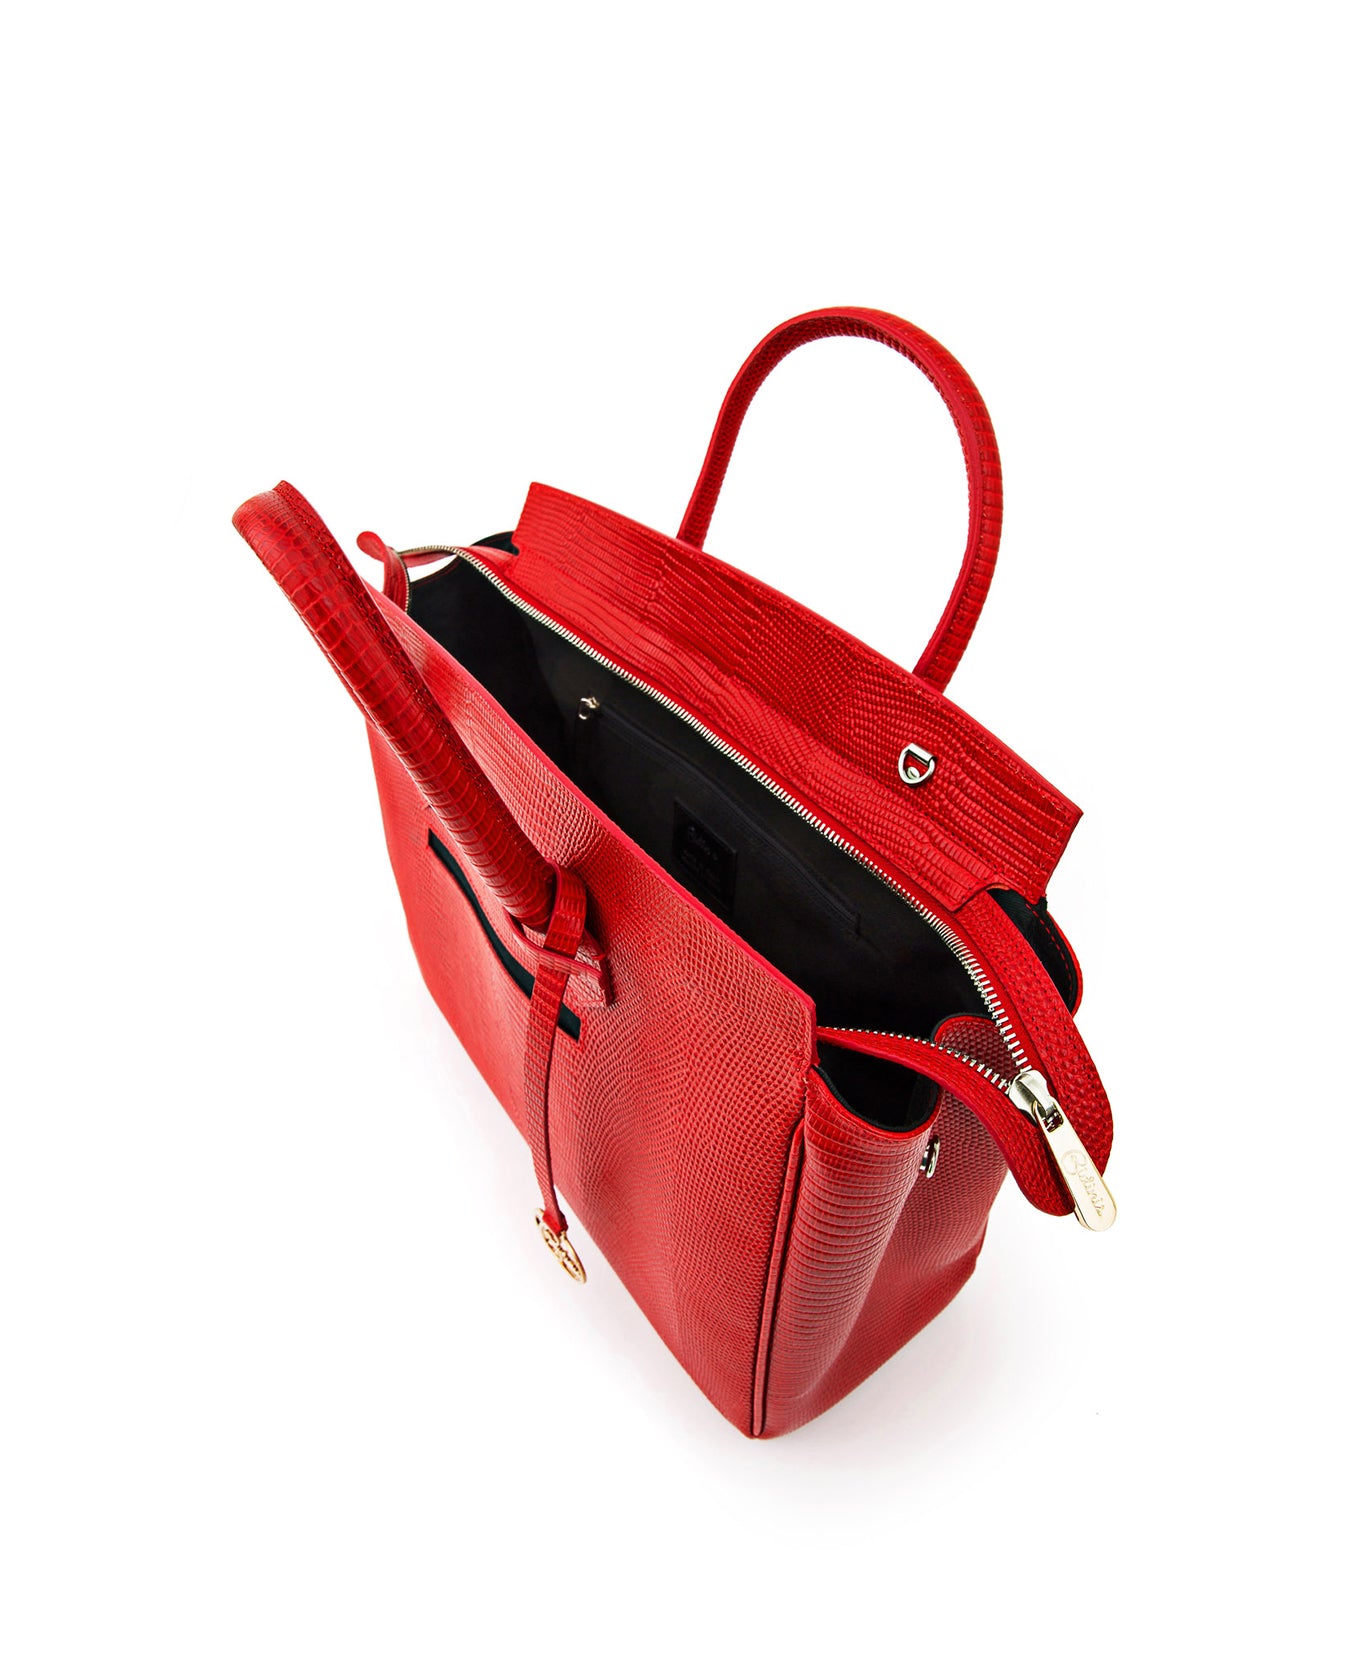 lizard print leather bag, red handbag, Italian leather bag, made in Italy,  red leather handbag, versatile accessories for any occasion, medium-sized handbag, Italian leather handbag, elegant and sophisticated handbag, well-organised interior handbag, practical and stylish handbag